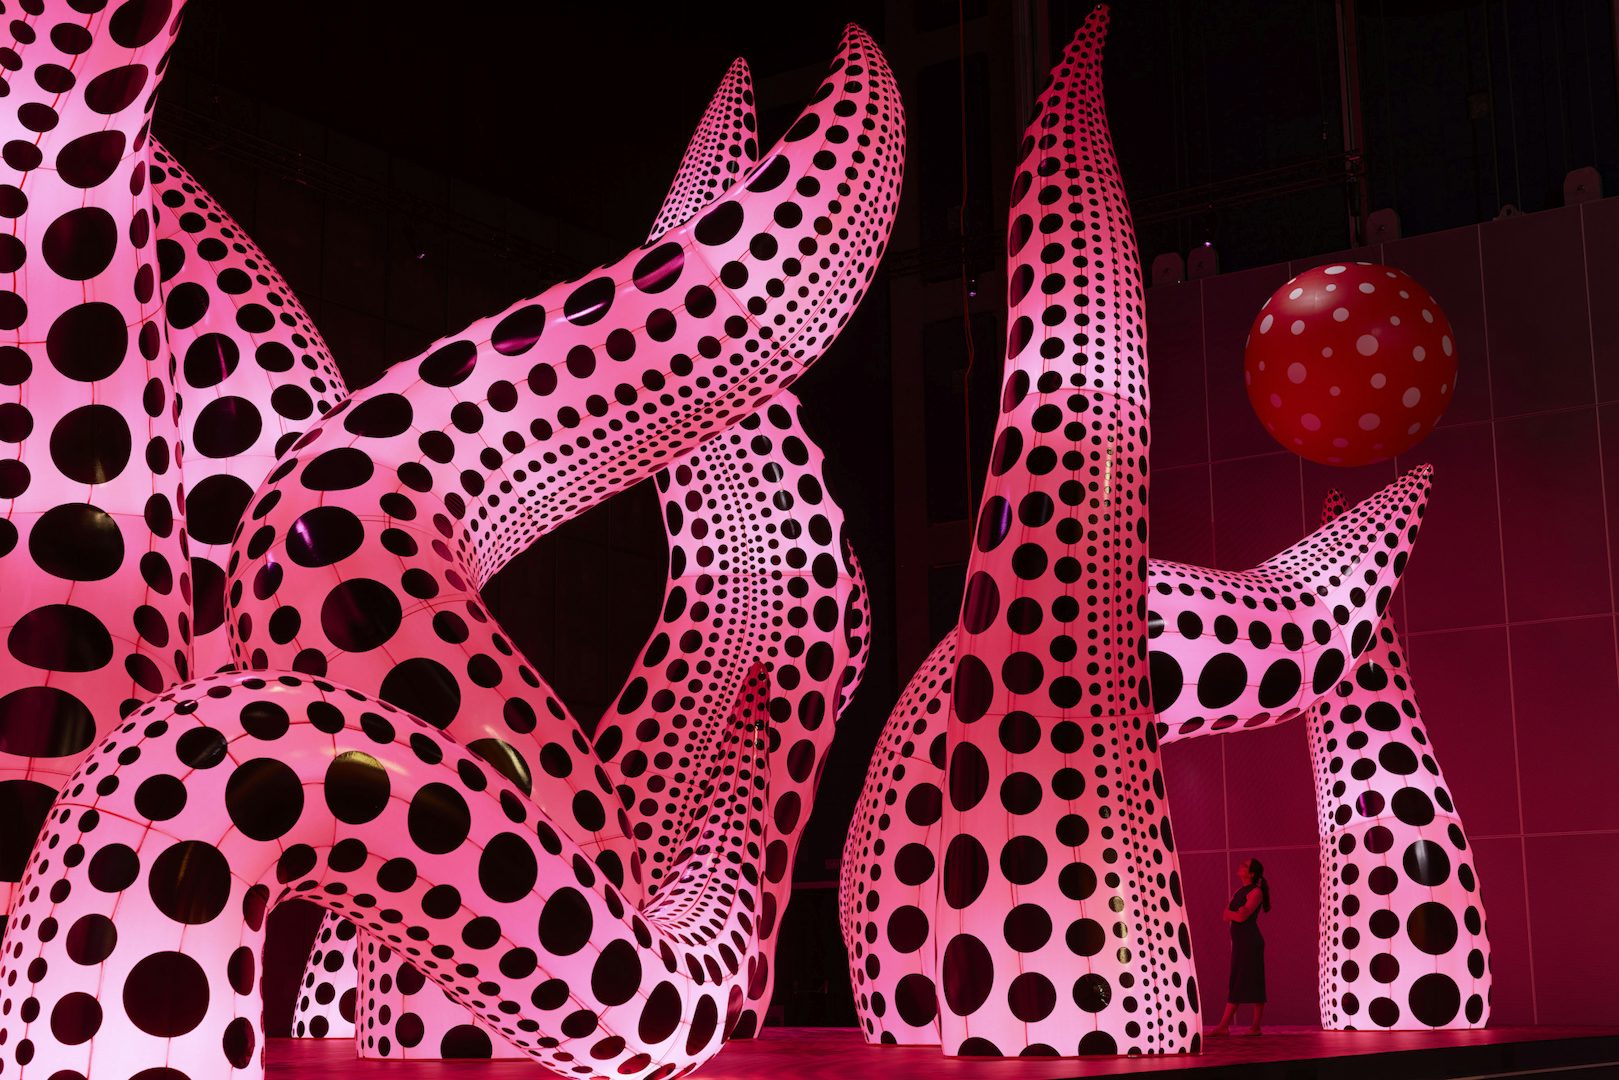 Louis Vuitton launch external art installation to celebrate New